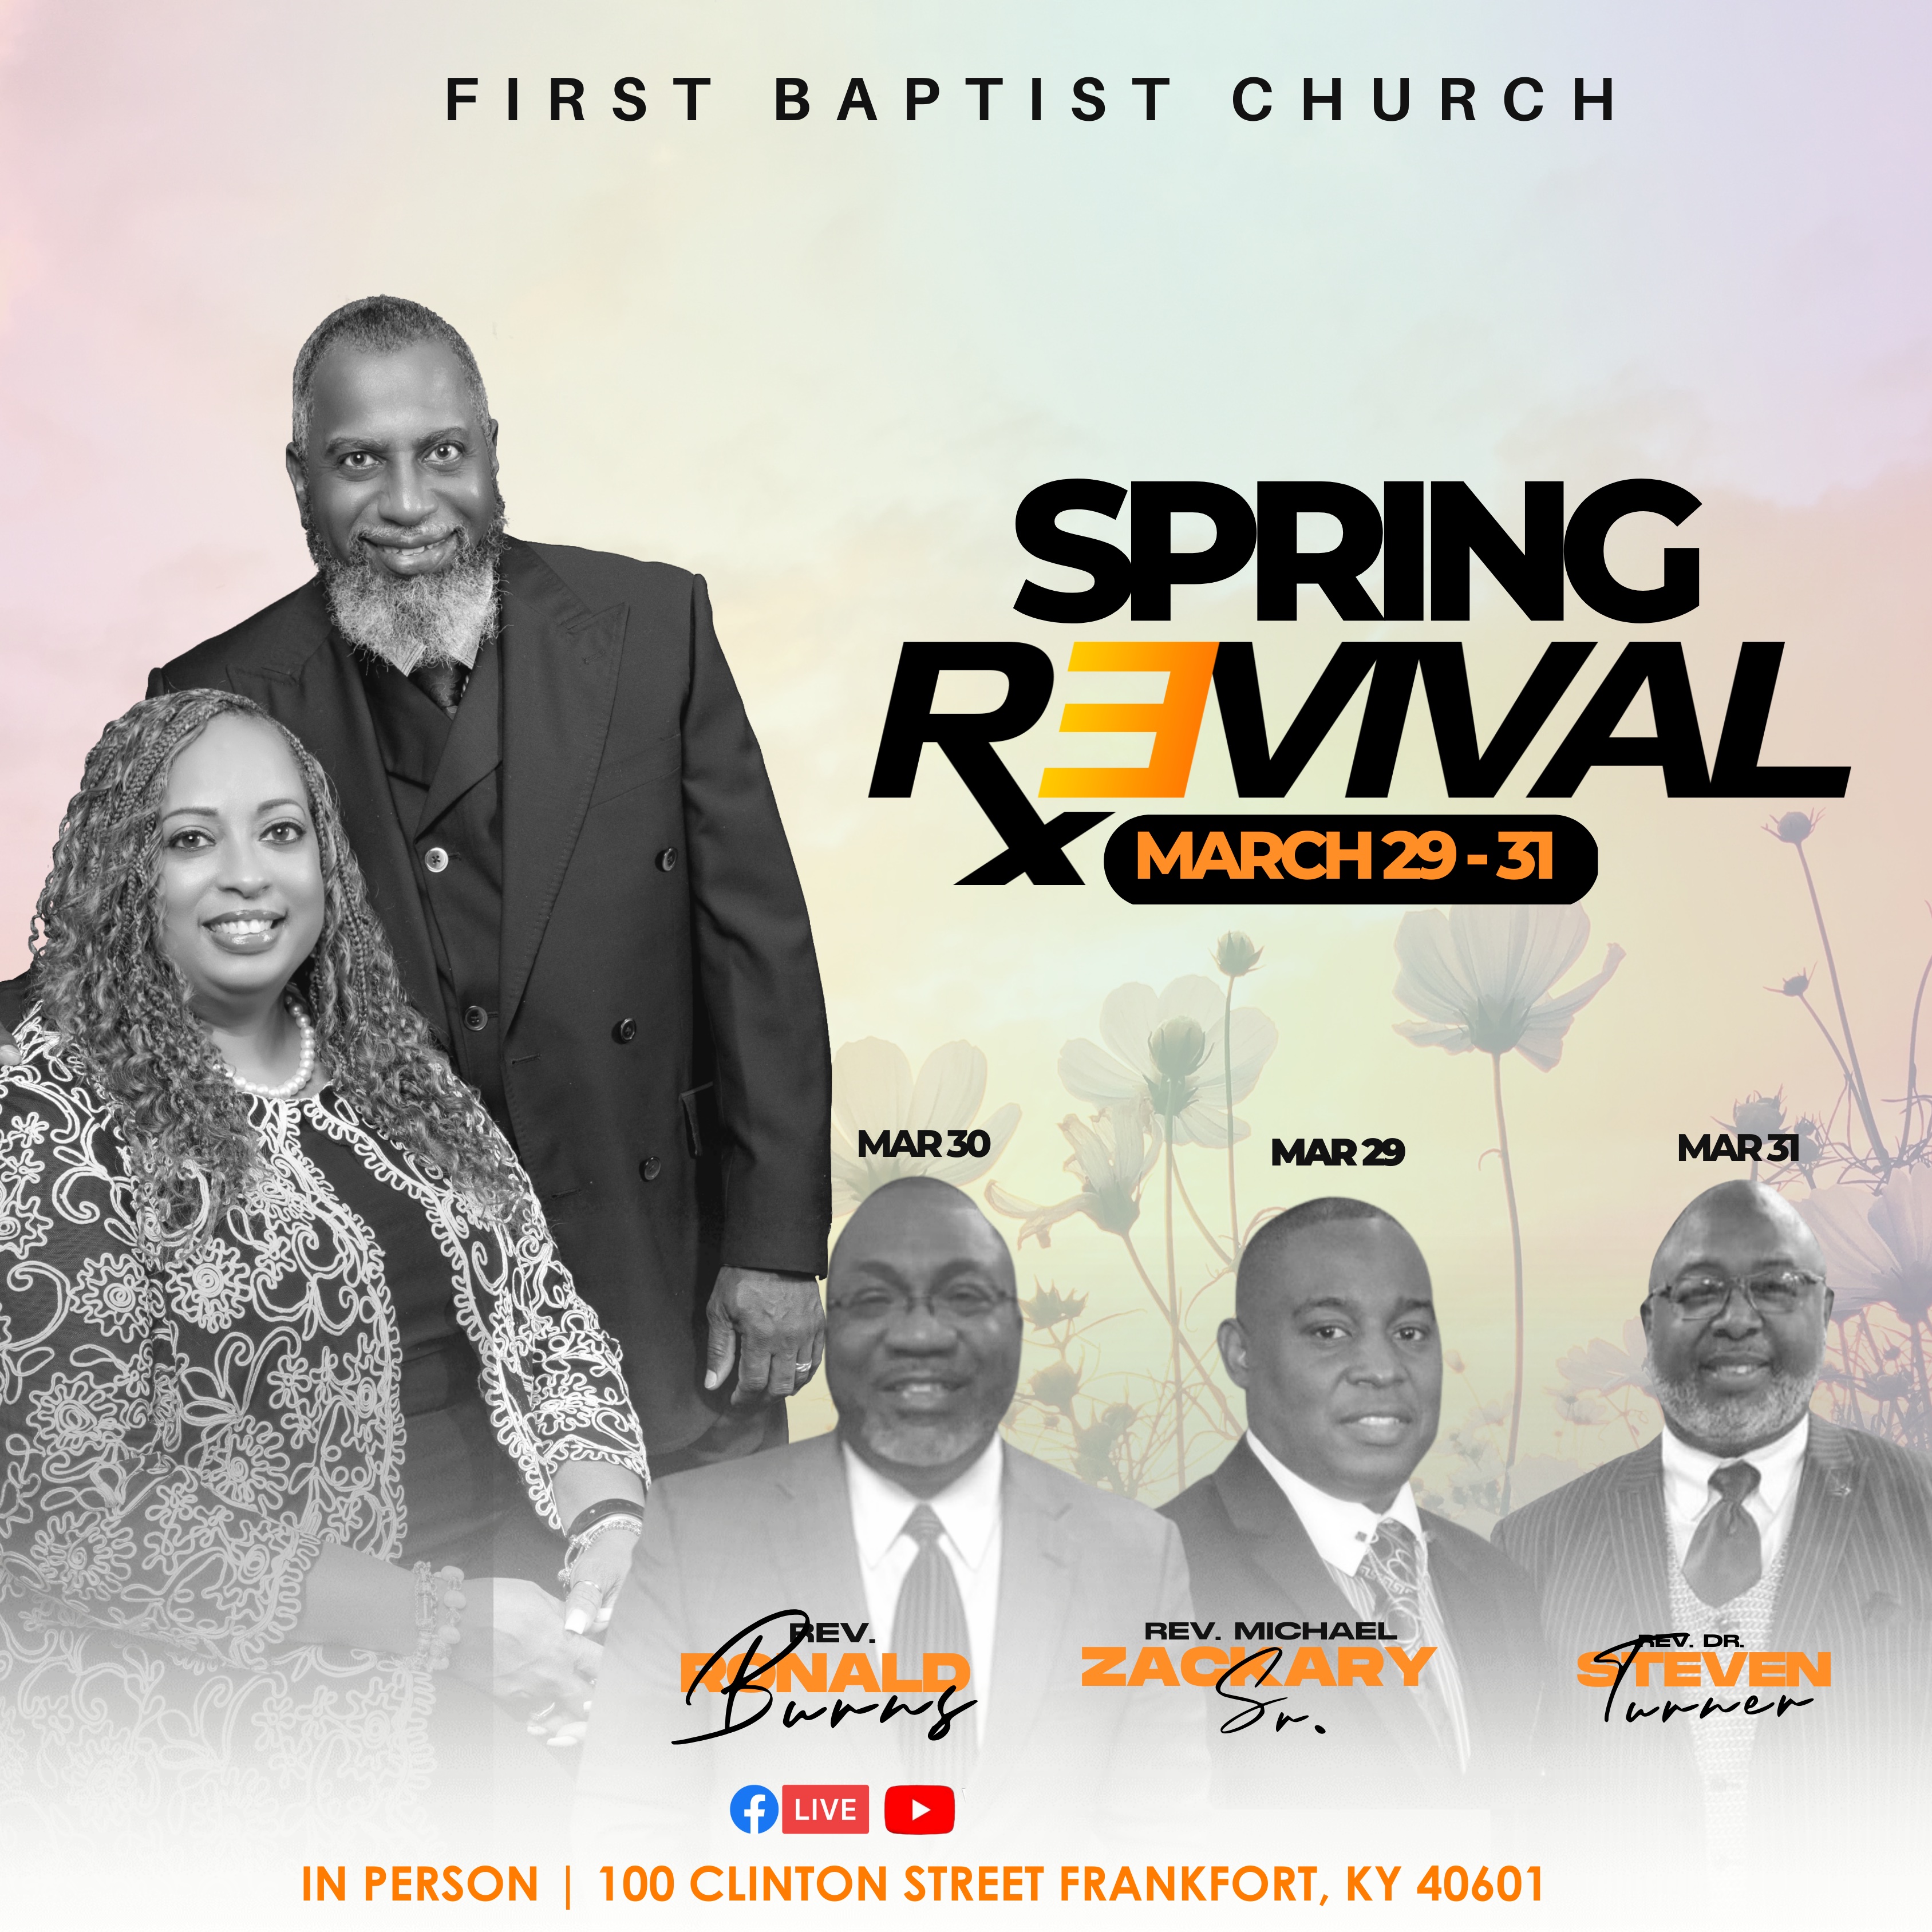 Spring Revival - First Baptist Church Frankfort KY